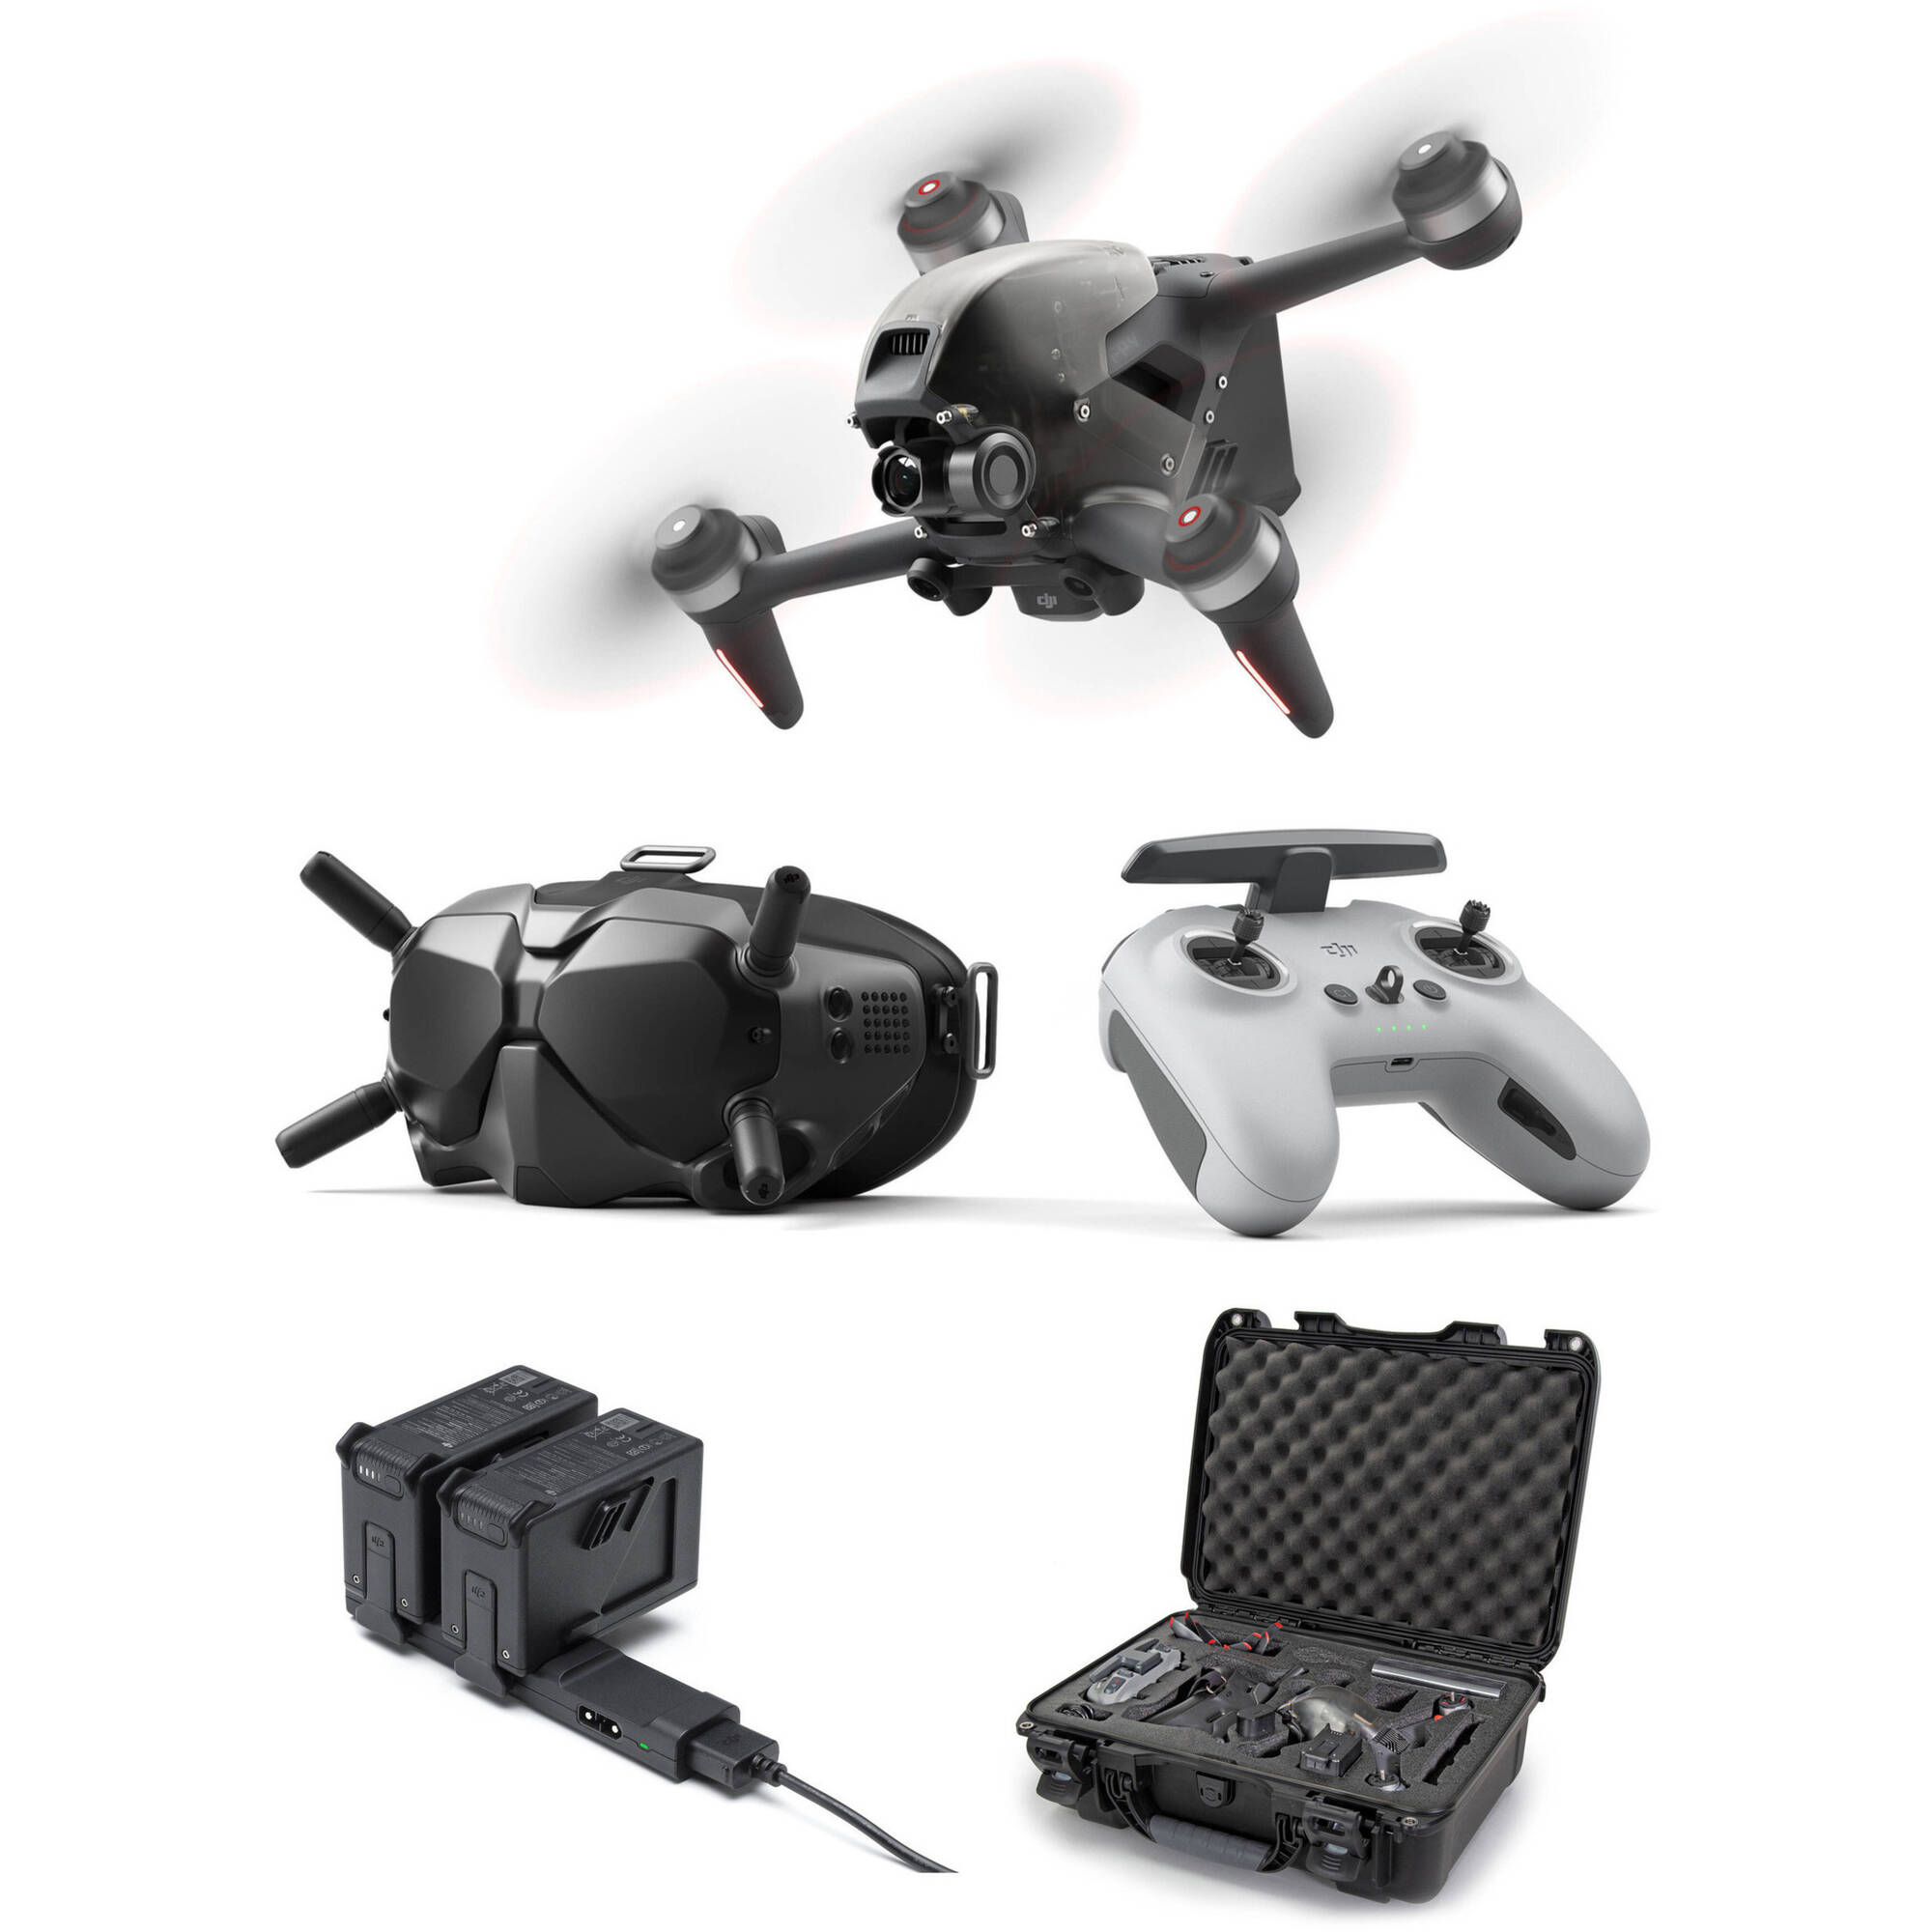 Dron DJI FPV con estuche y kit Fly More